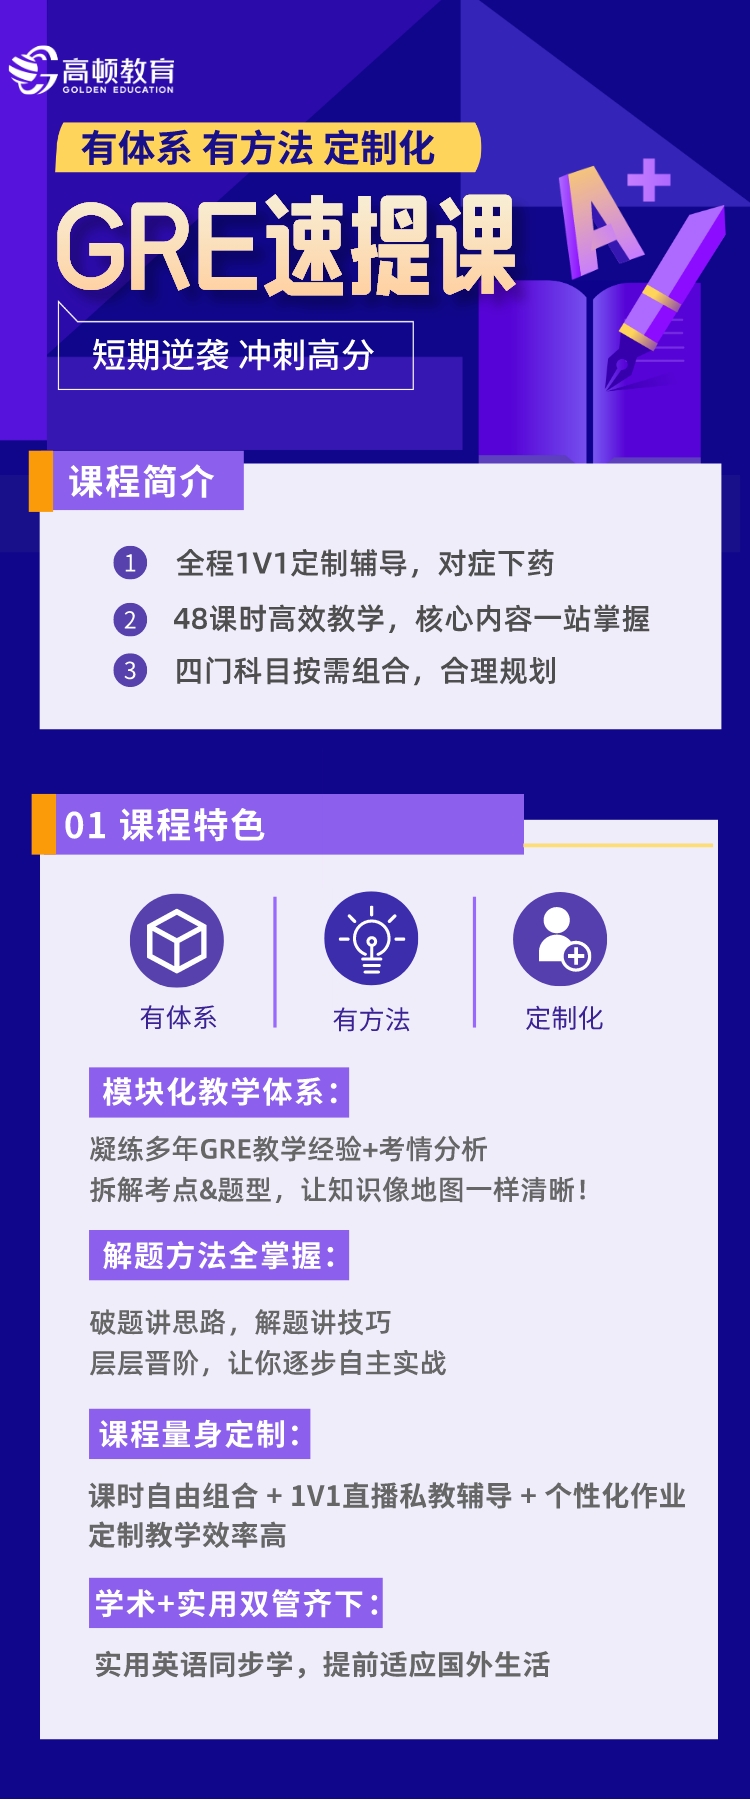 https://simg01.gaodunwangxiao.com/uploadfiles/product-center/202303/27/4e290_20230327153746.jpeg